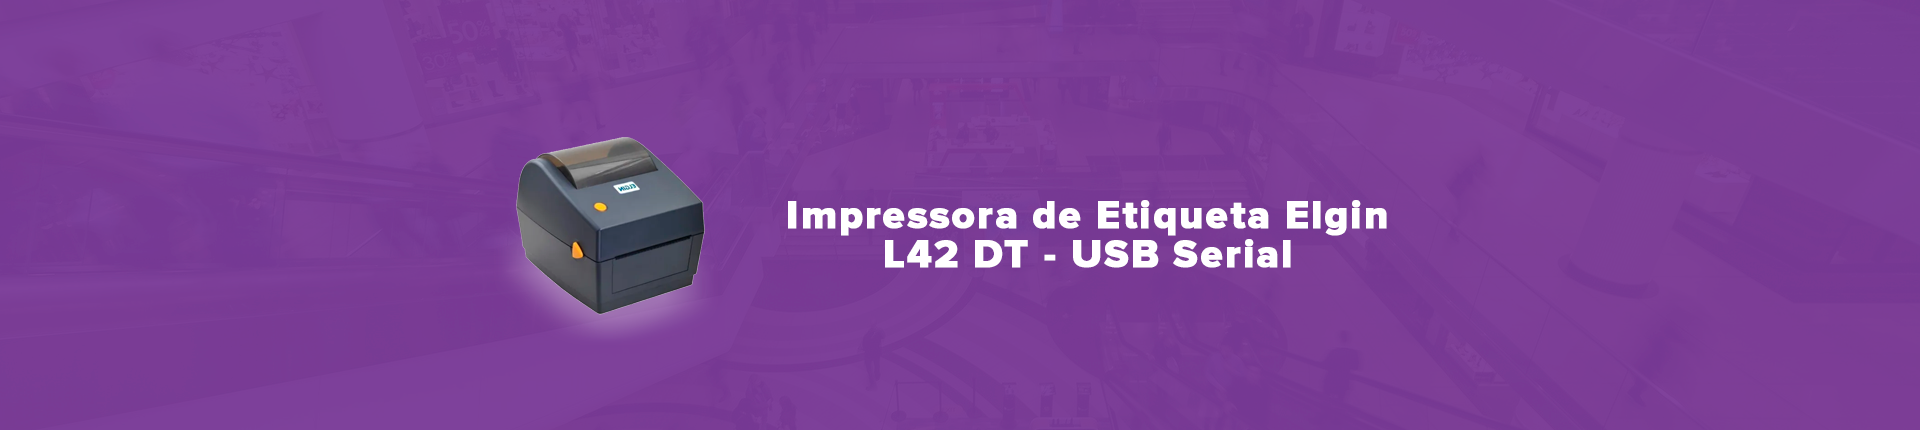 Full Banner Impressora de etiqueta elgin l42 DT - usb serial